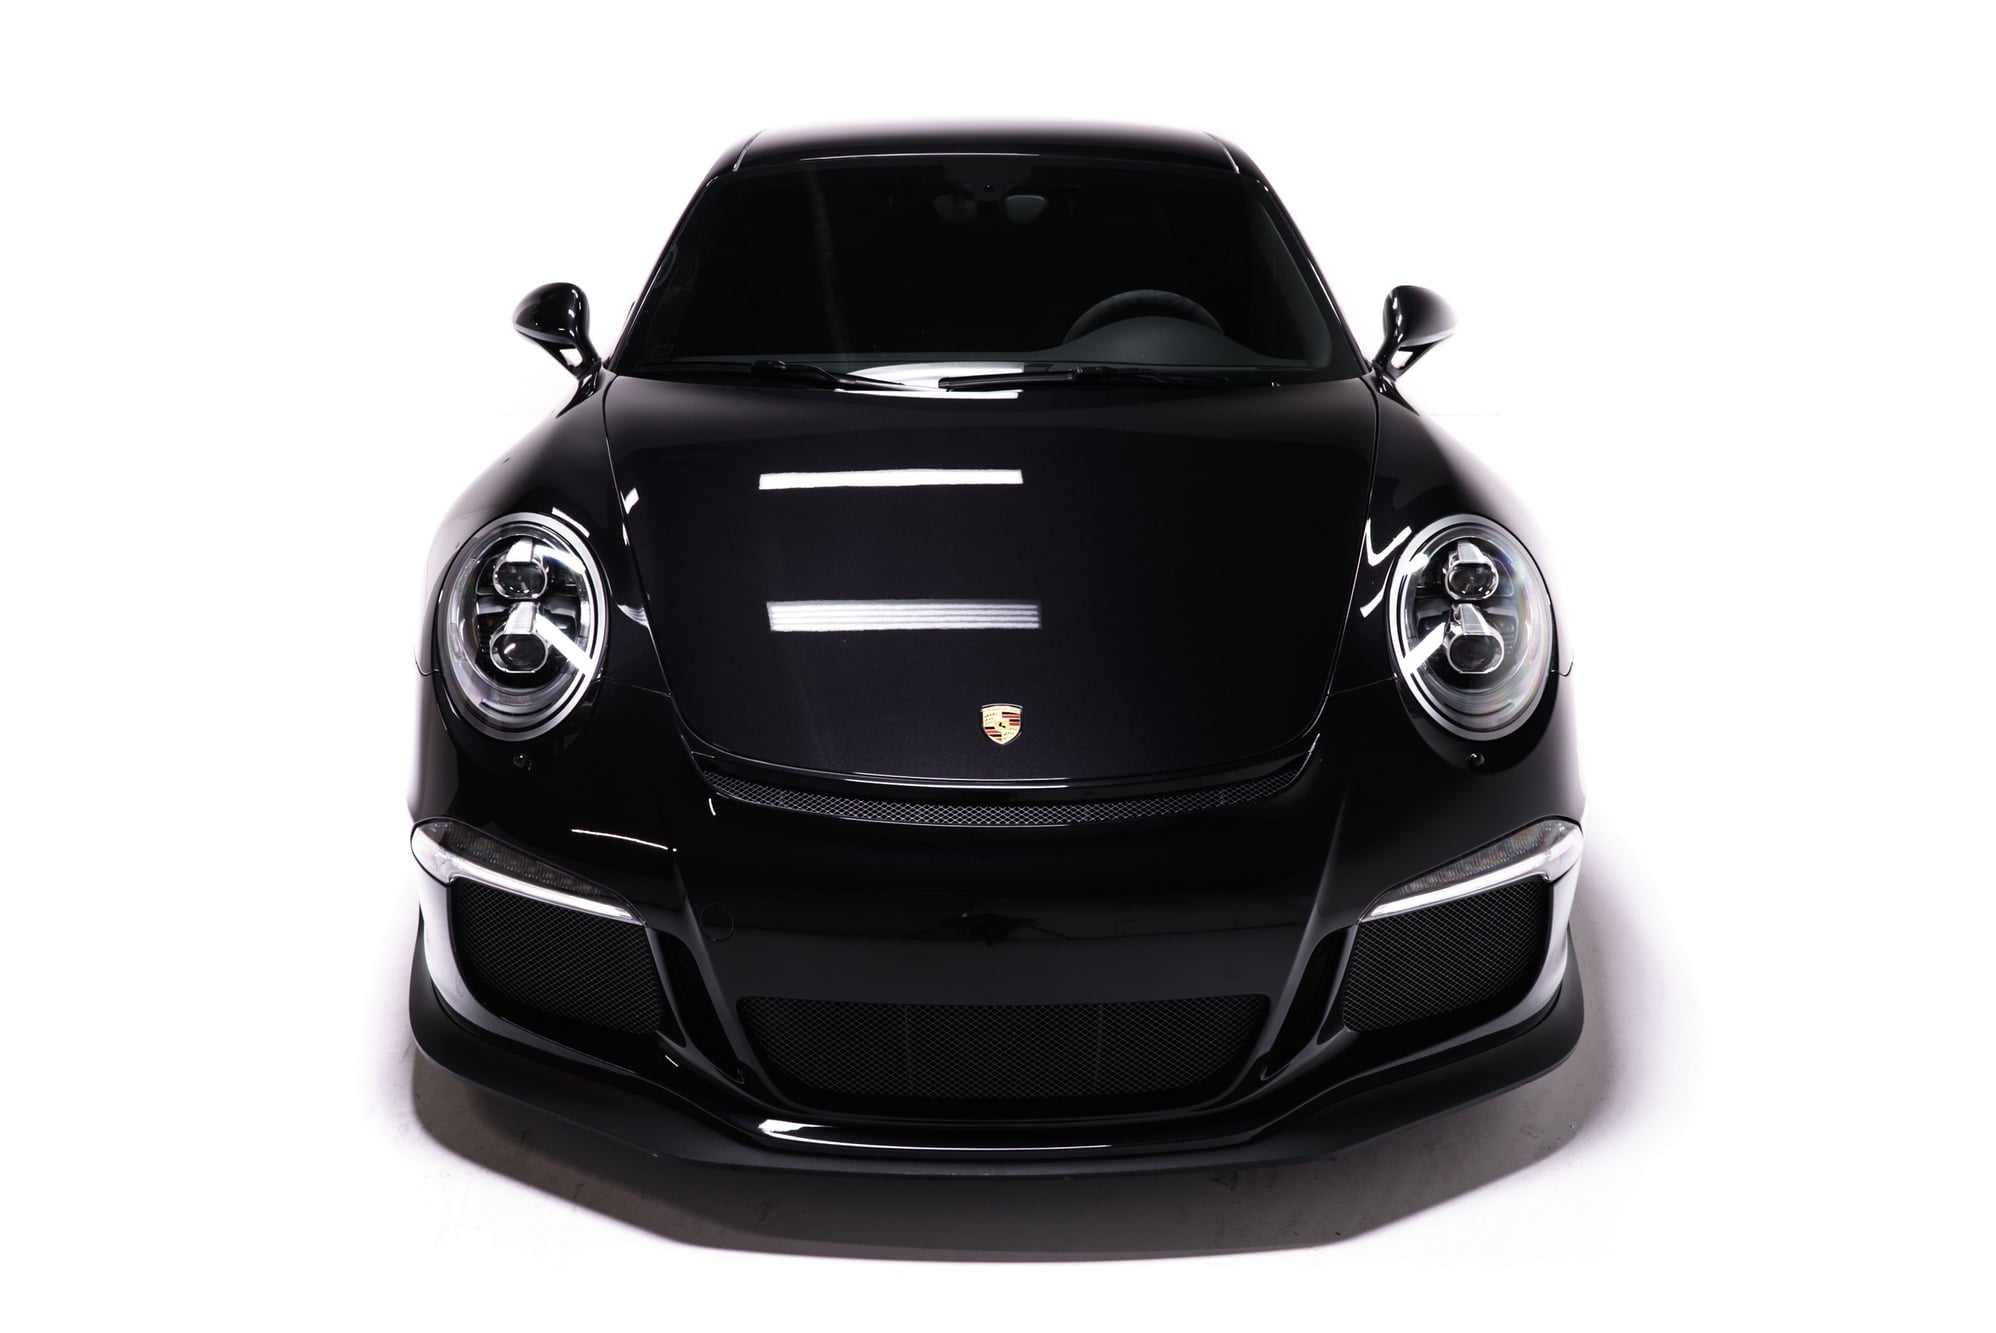 2014 Porsche GT3 - 2014 Porsche 911 GT3 Basalt Black w/ CCBs! - Used - VIN WP0AC2A95ES183301 - 12,251 Miles - 6 cyl - 2WD - Automatic - Coupe - Black - Murrieta, CA 92562, United States